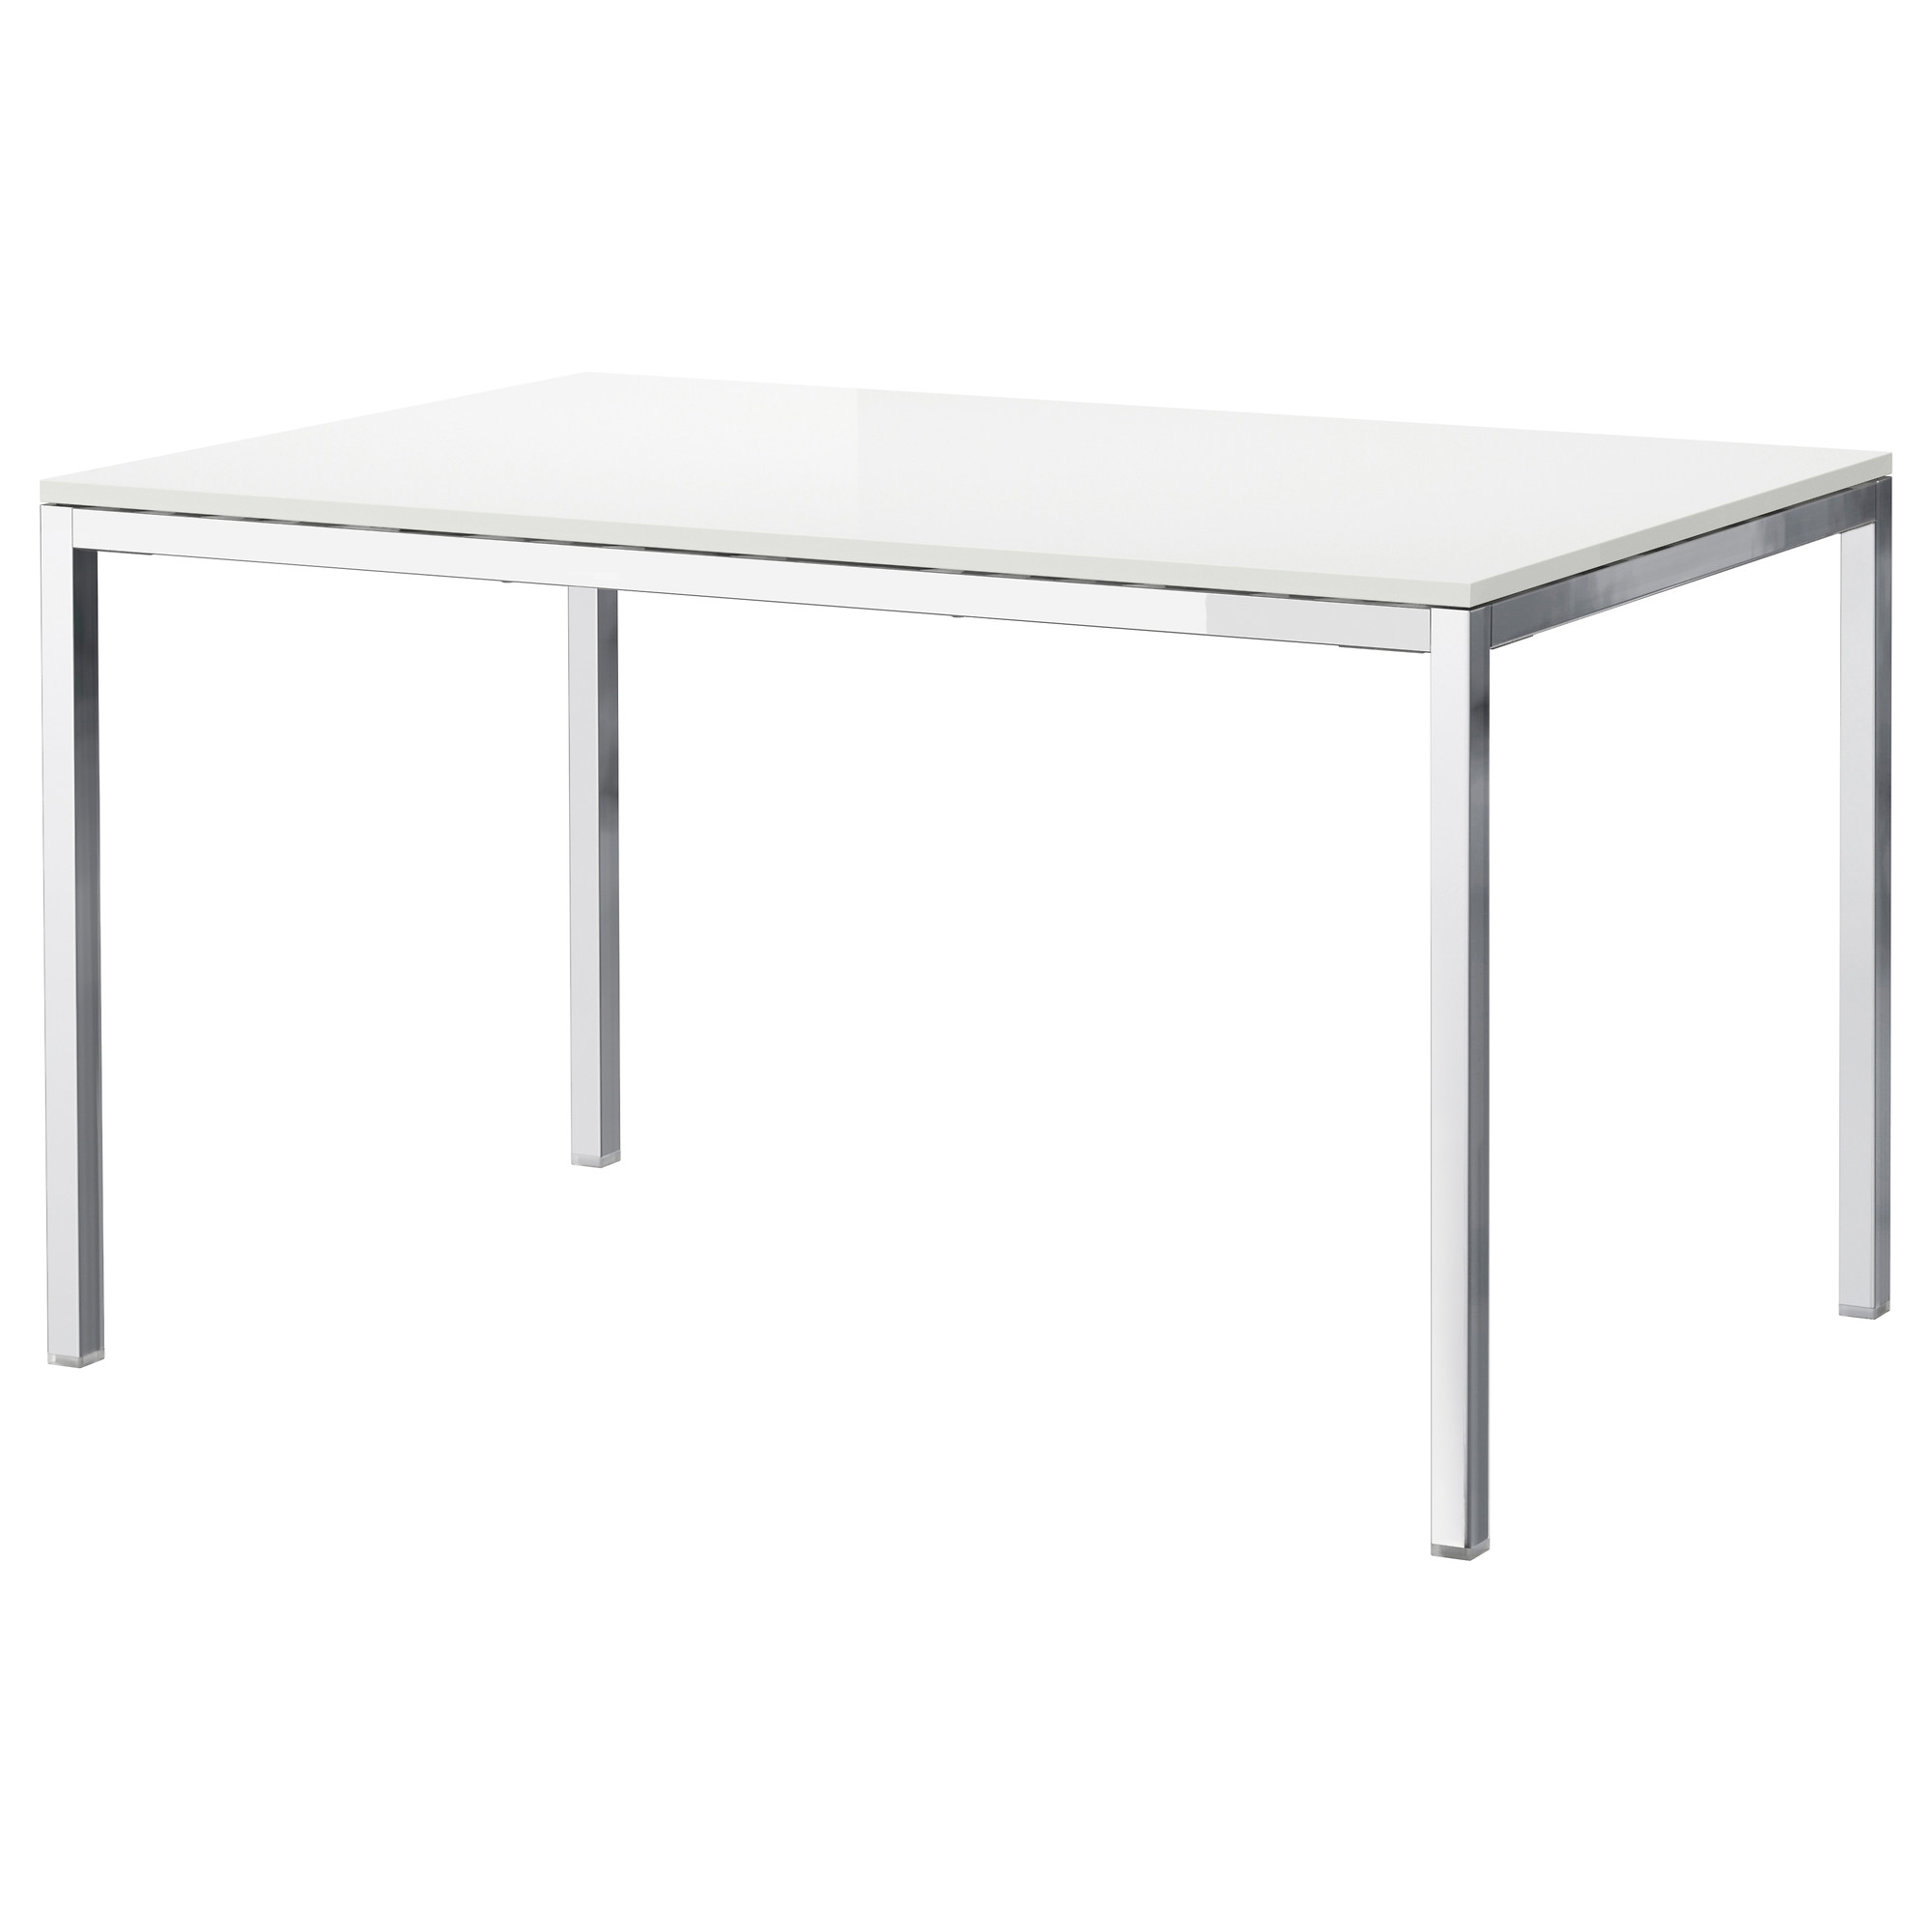 Torsby Table Chrome Plated High Gloss White Ikea Hong Kong